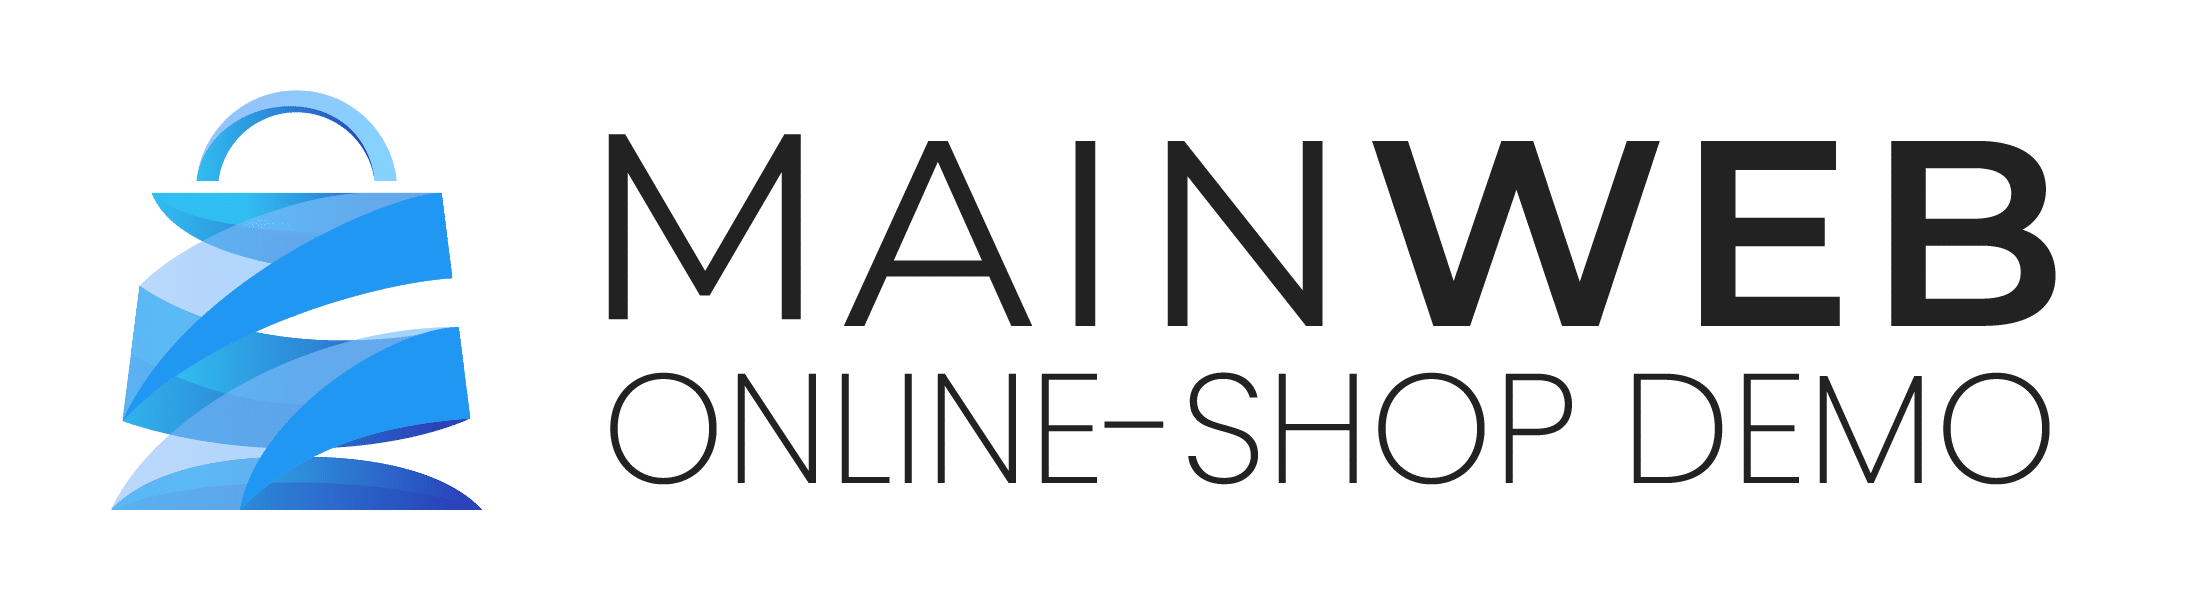 Mainweb Online Shop